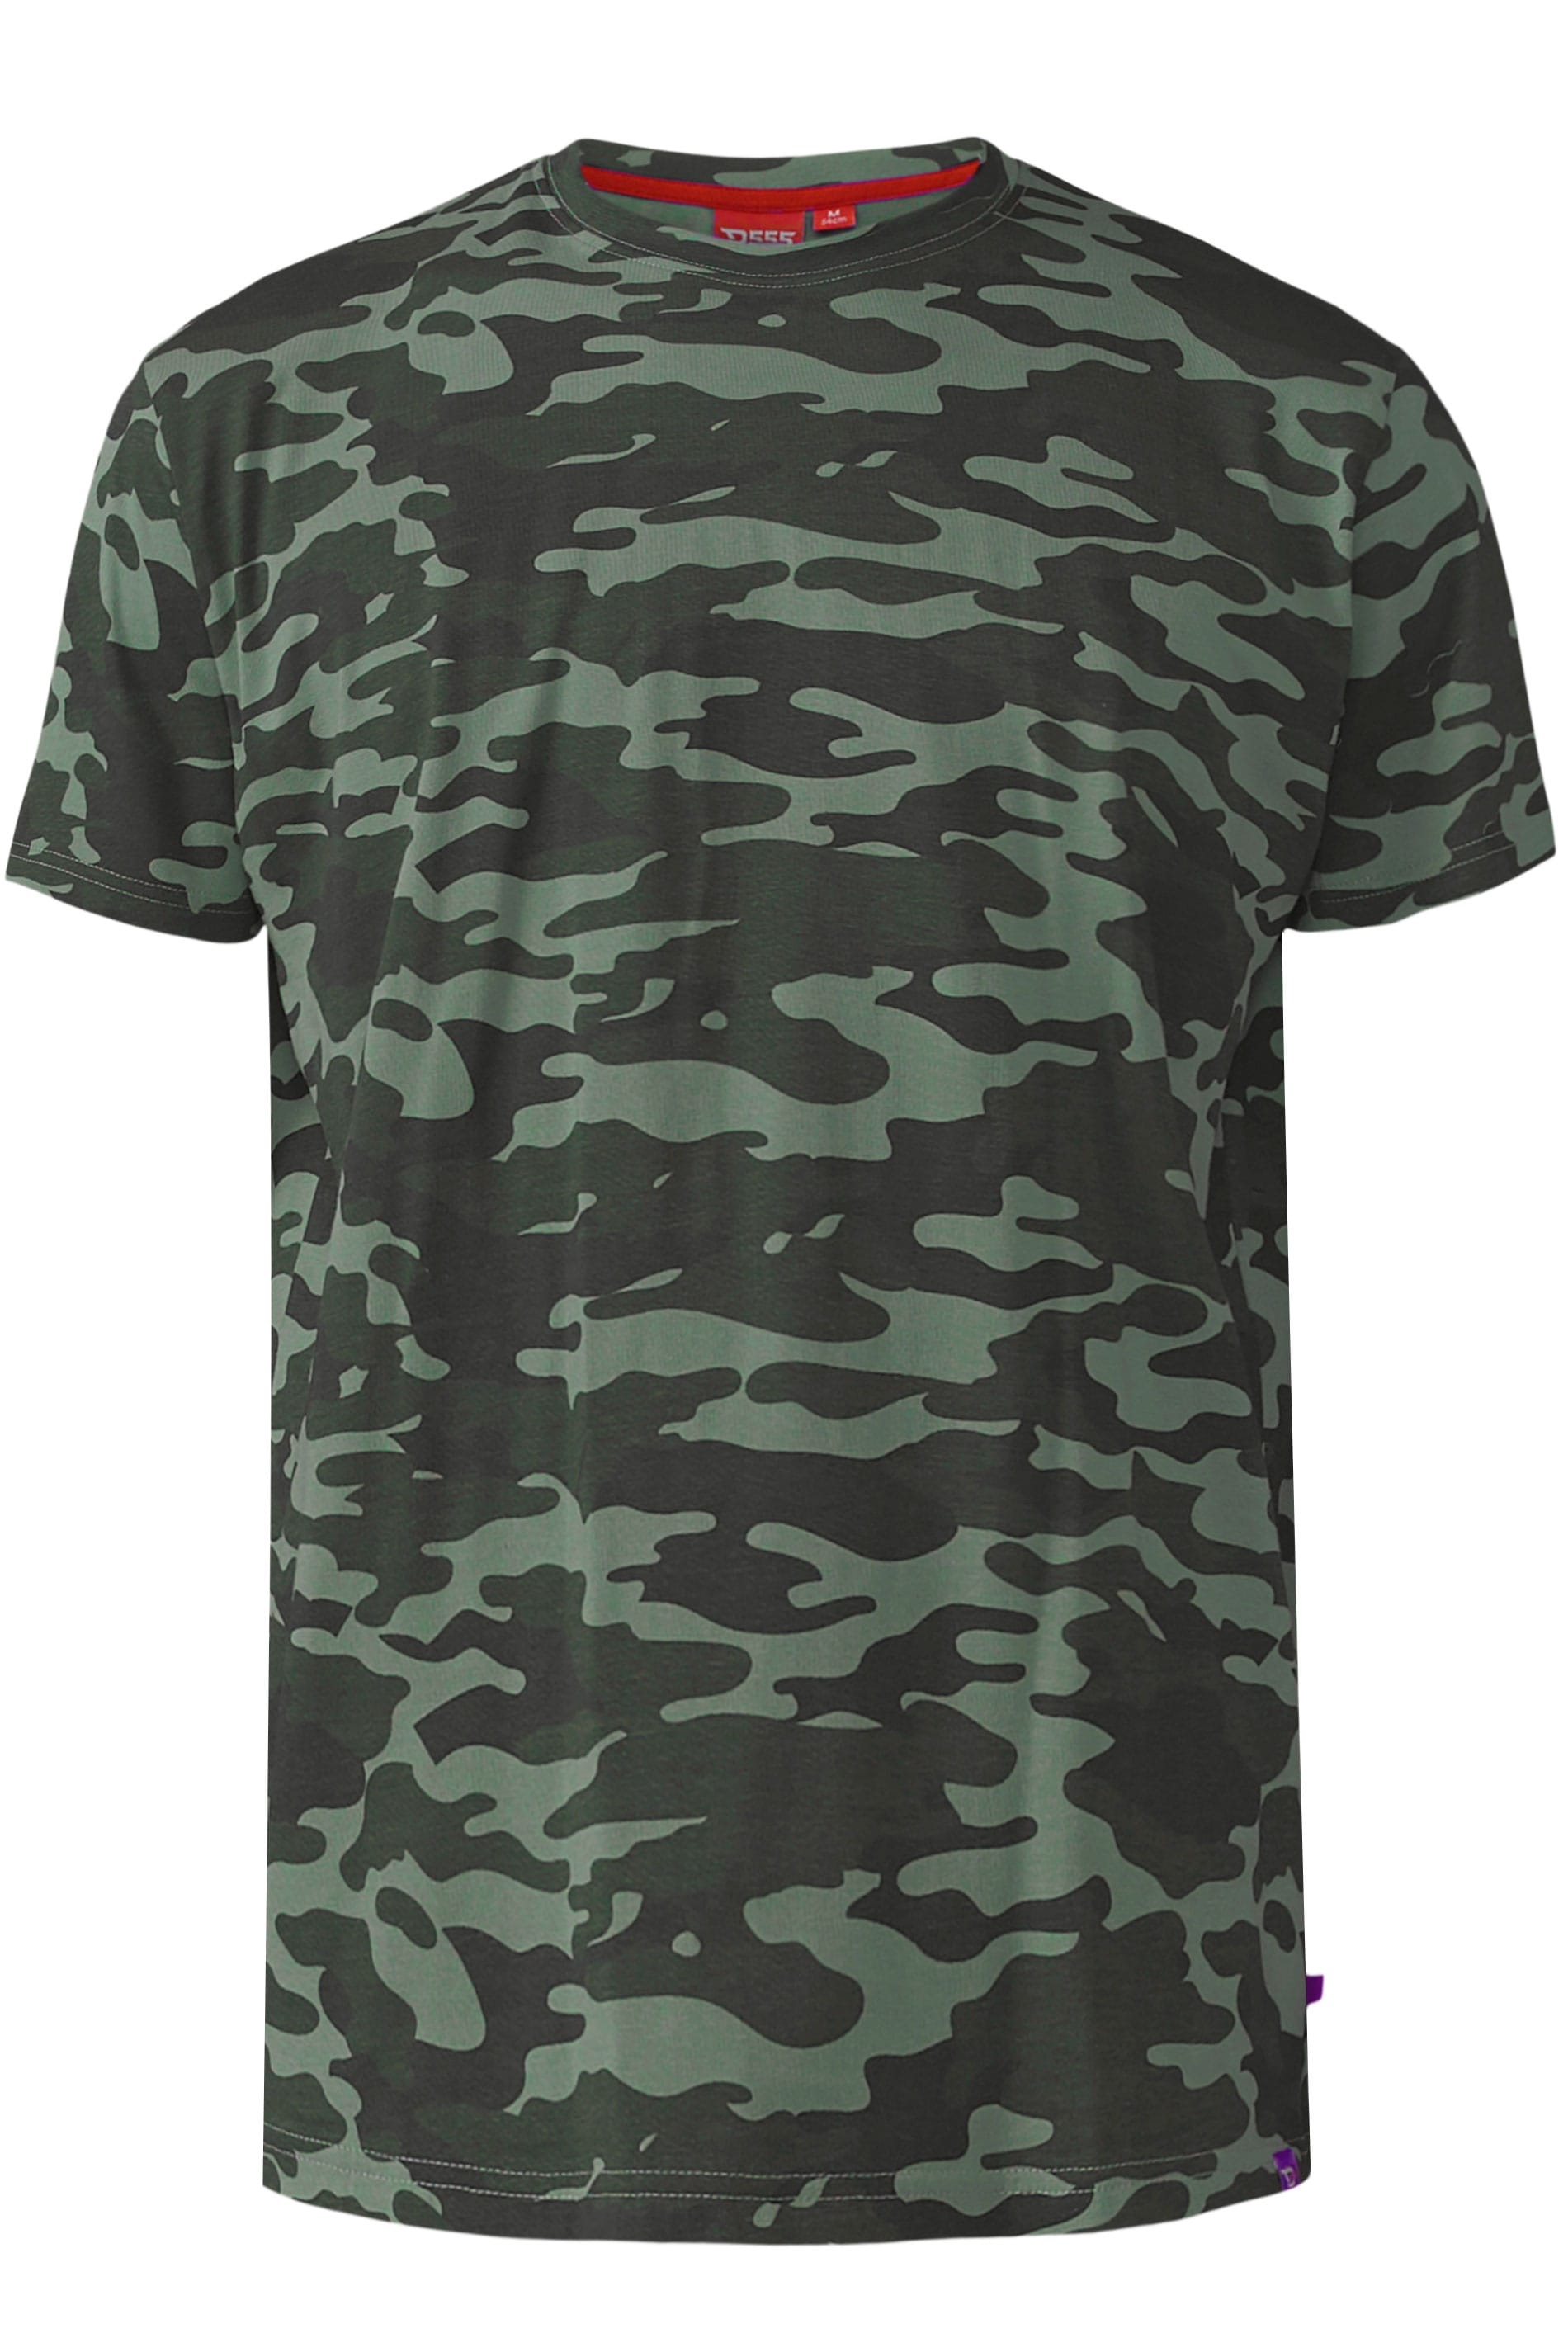 D555 Green Camouflage T-Shirt | BadRhino 2